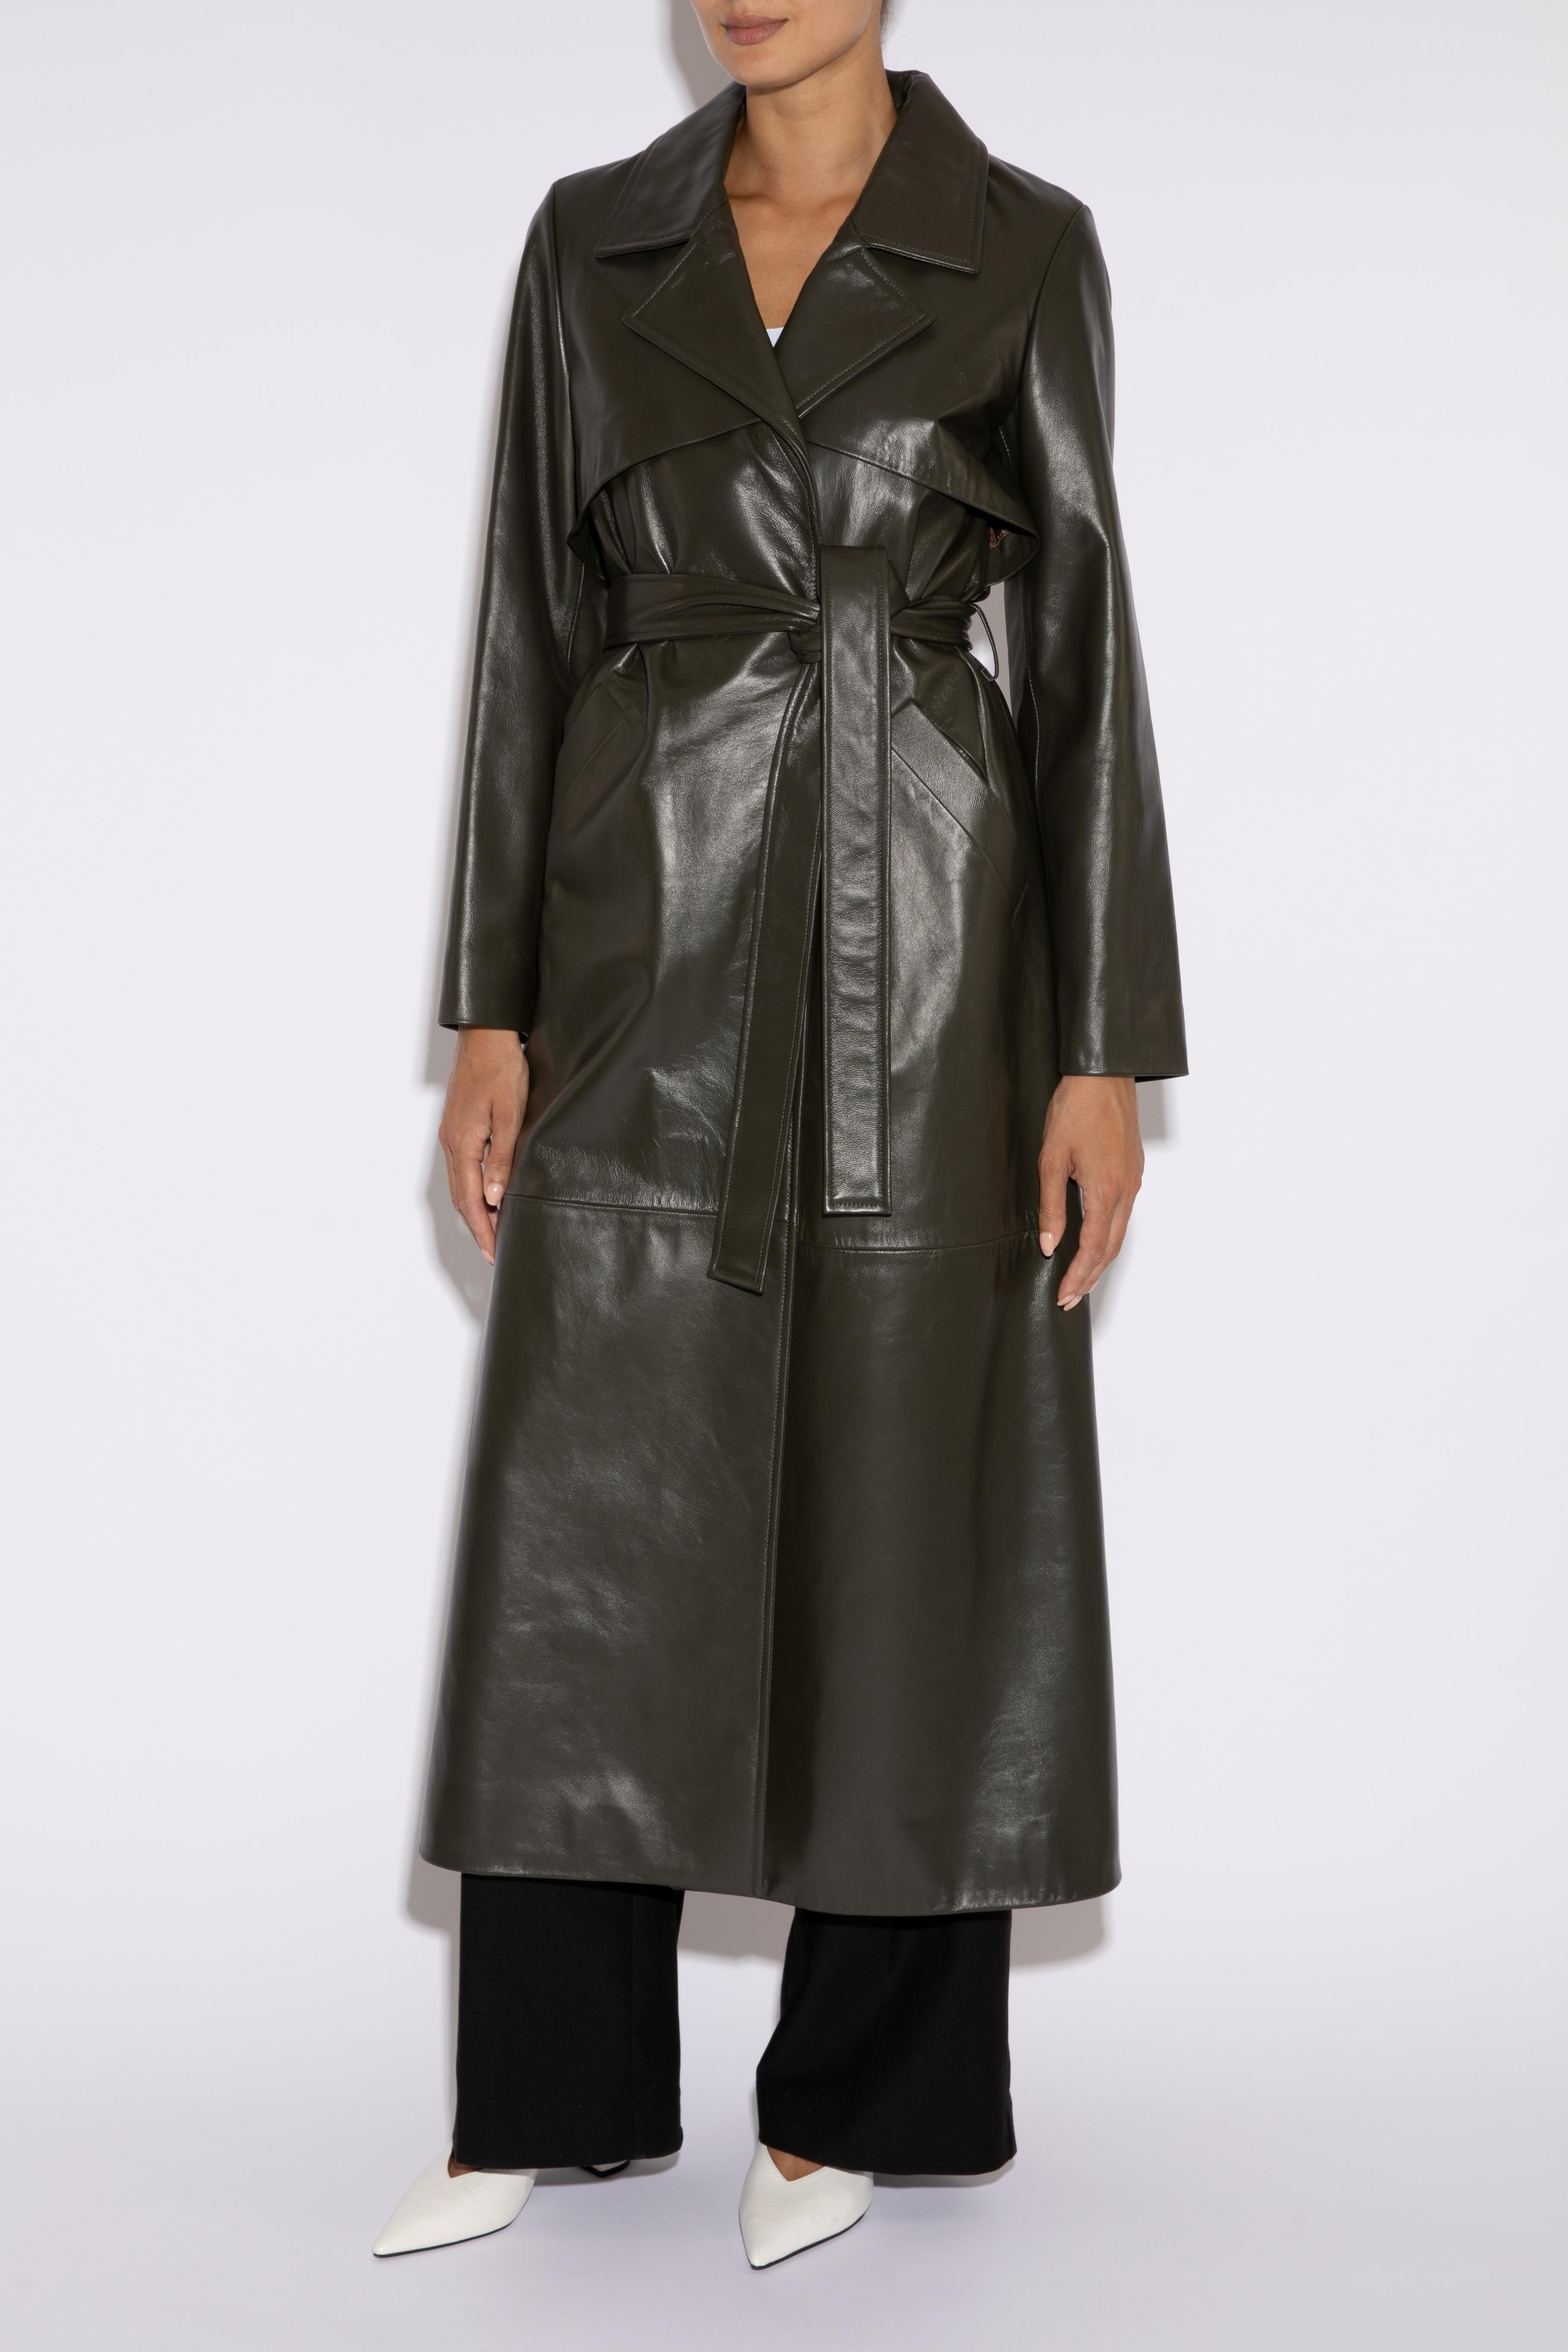 Trench-coat Verheyen London en cuir vert kaki foncé - Taille UK 12 Pour femmes en vente